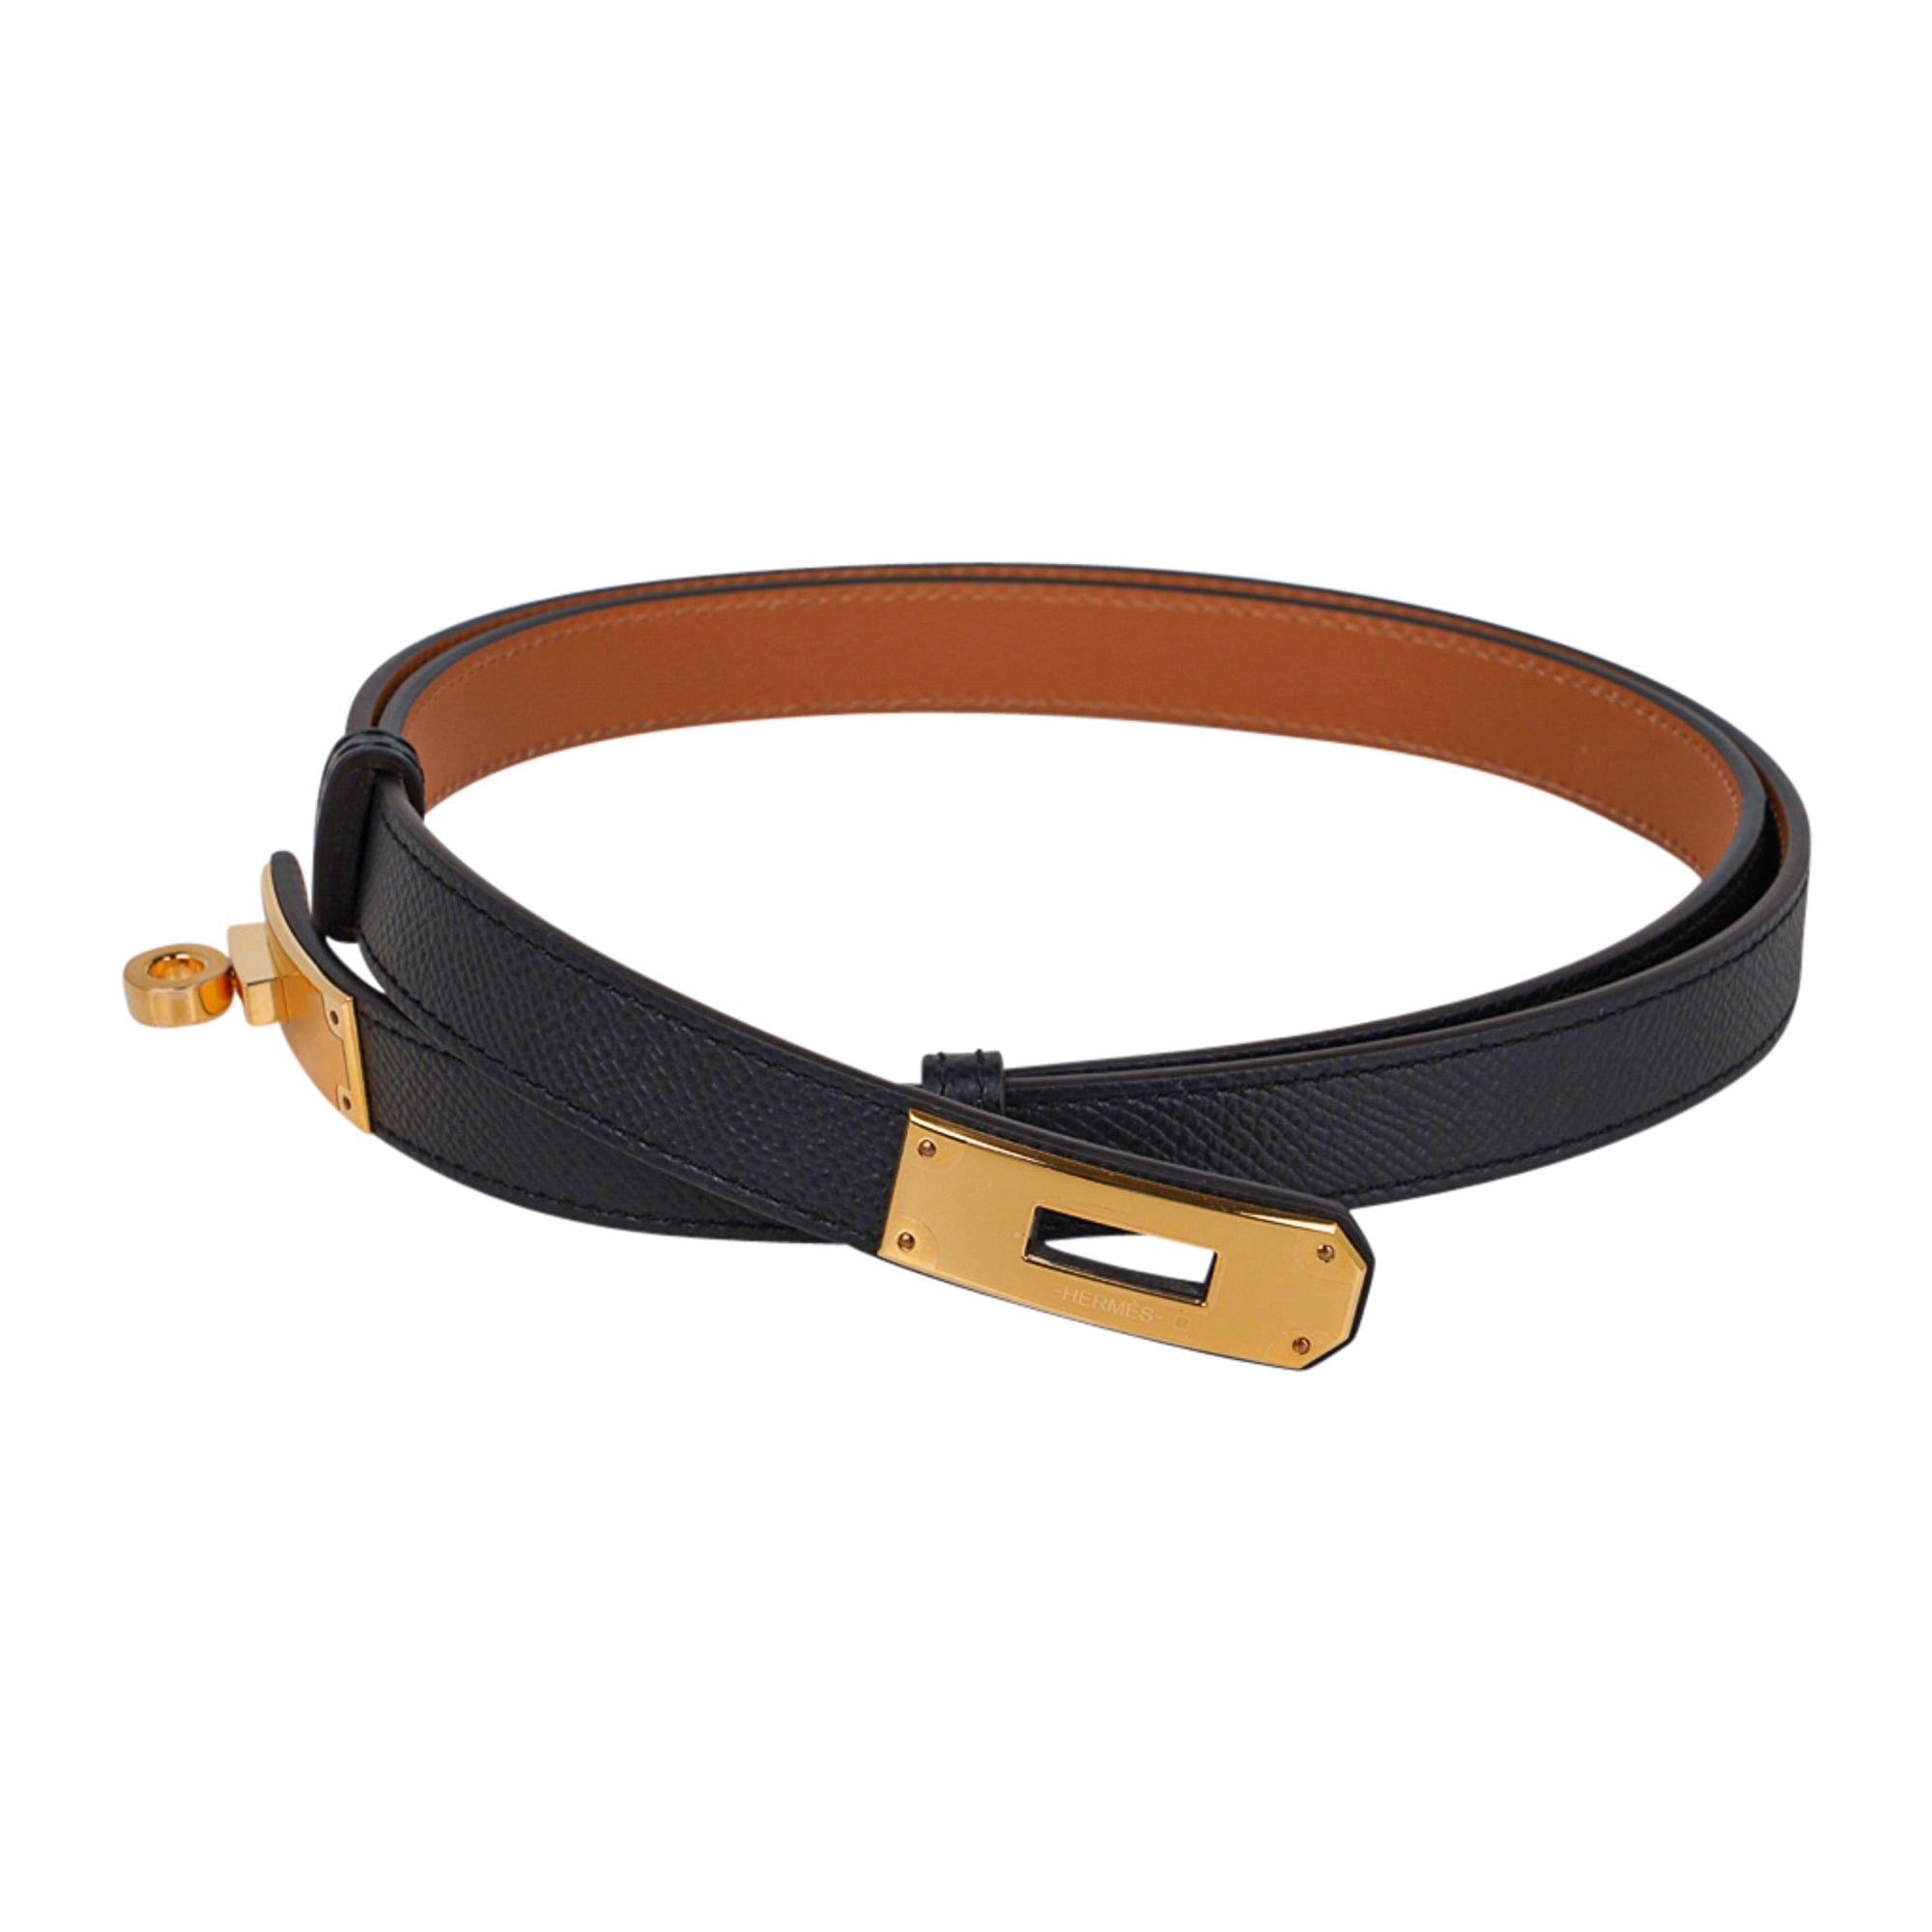 Kelly leather belt Hermès Gold size 85 cm in Leather - 32976454